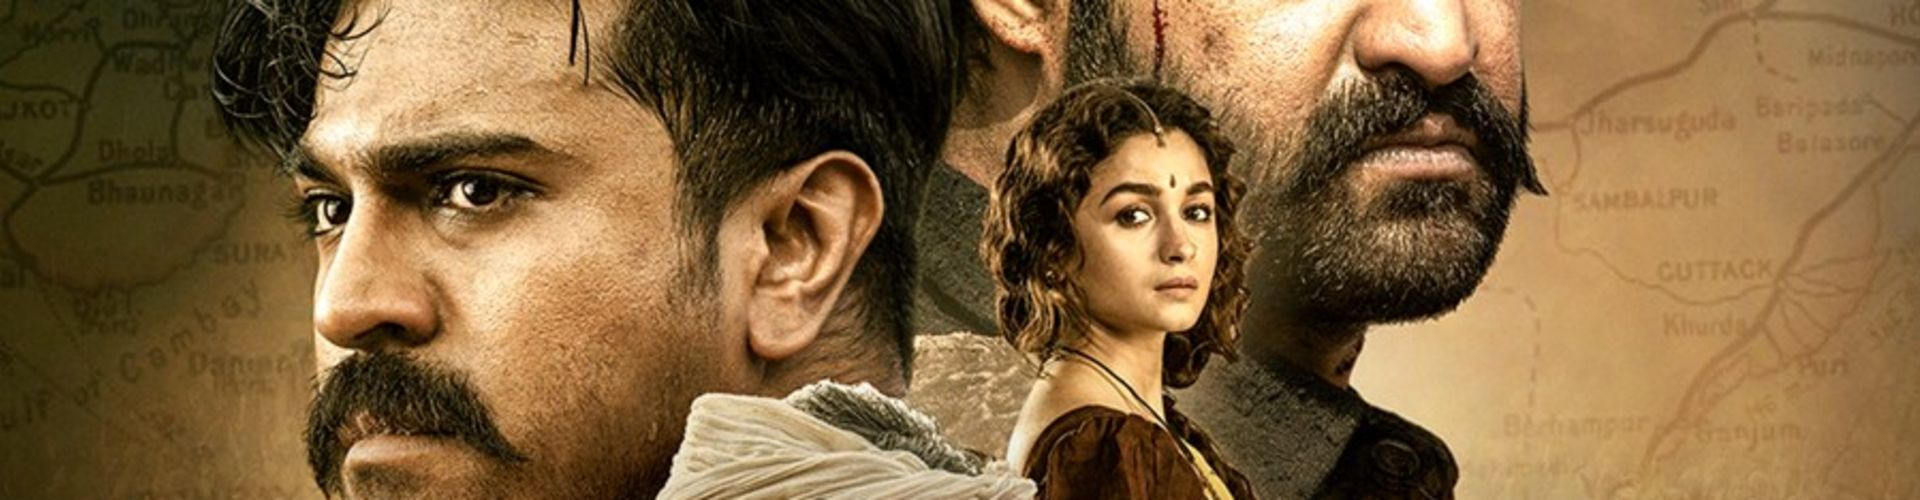 RRR Hindi Version Streaming Date Changed, Confirms Netflix